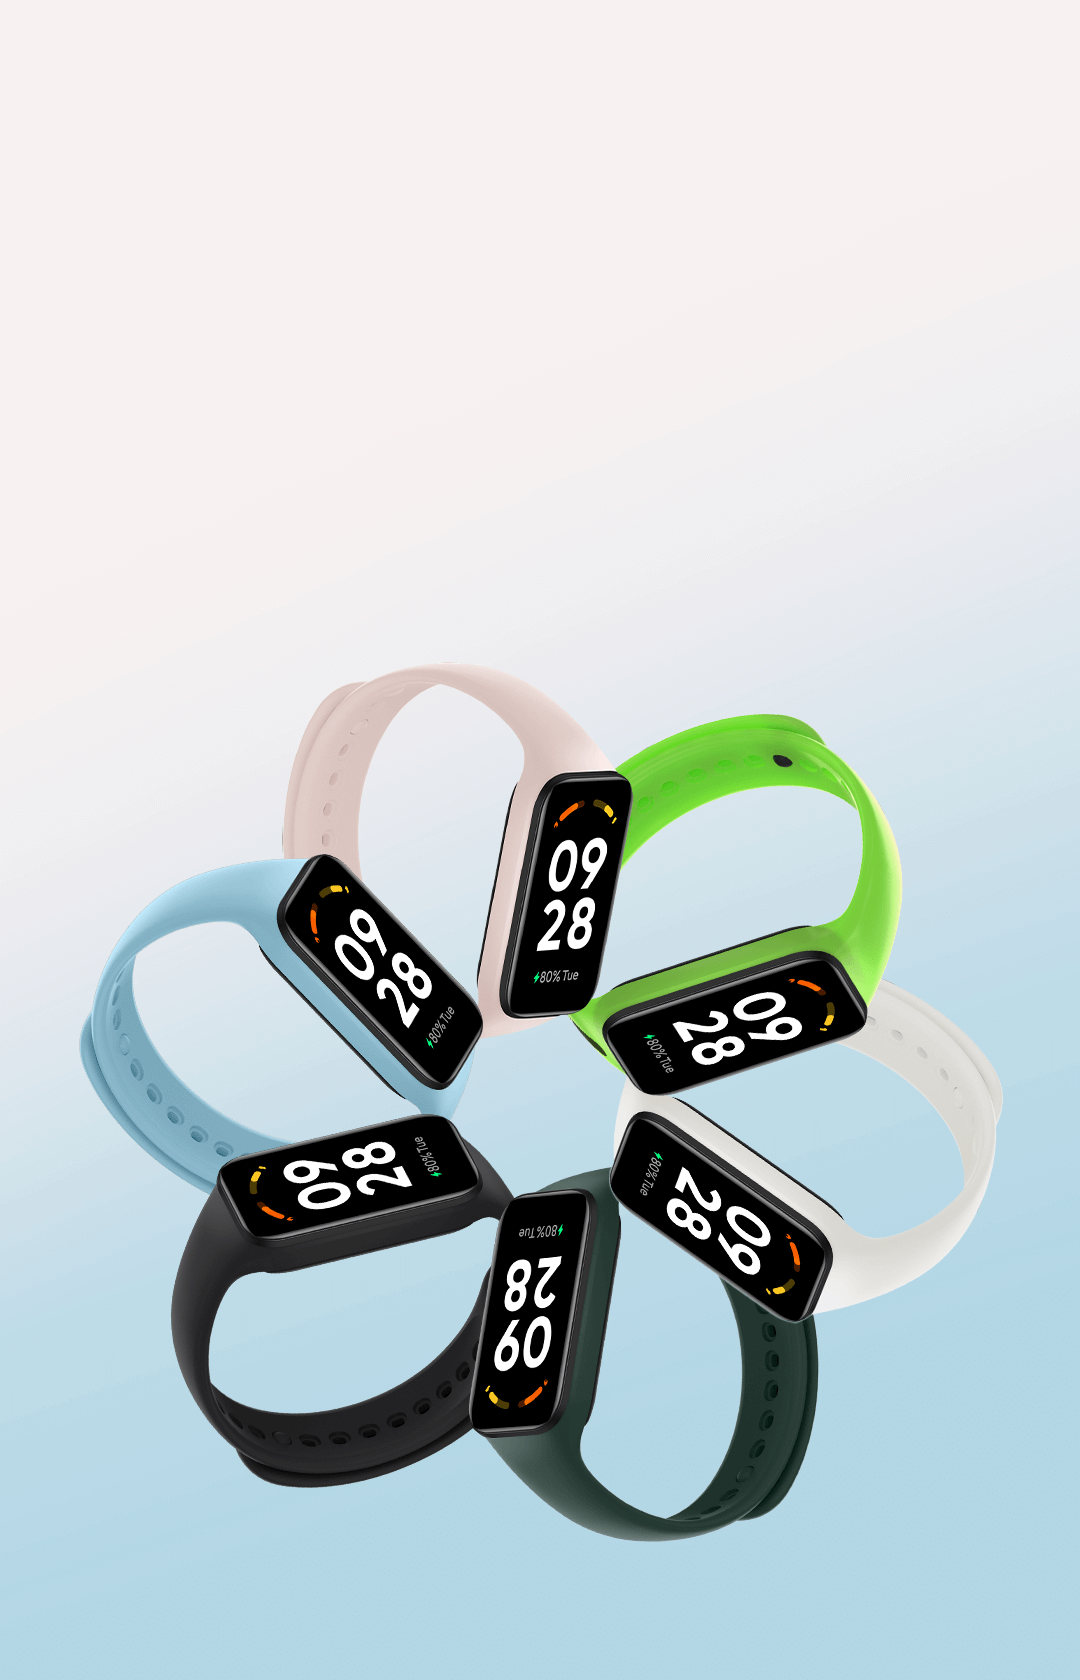 Adecuado para Xiaomi Redmi Band 2 Correa de repuesto Sport Smart Watch  Wristband Xiaomi Redmi Smart BANYUO